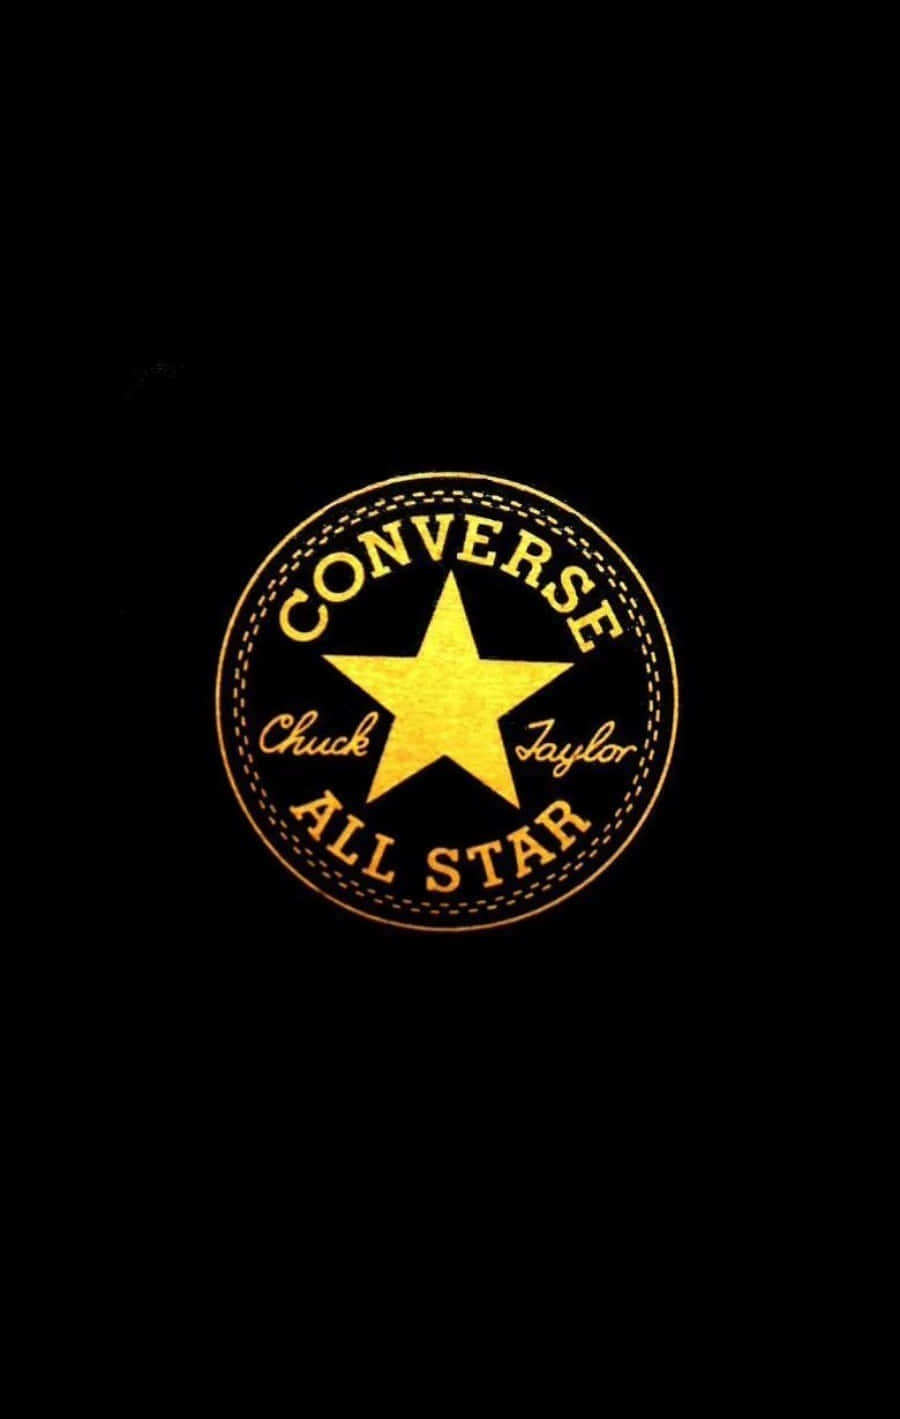 An Up-Close Look at the Converse Logo